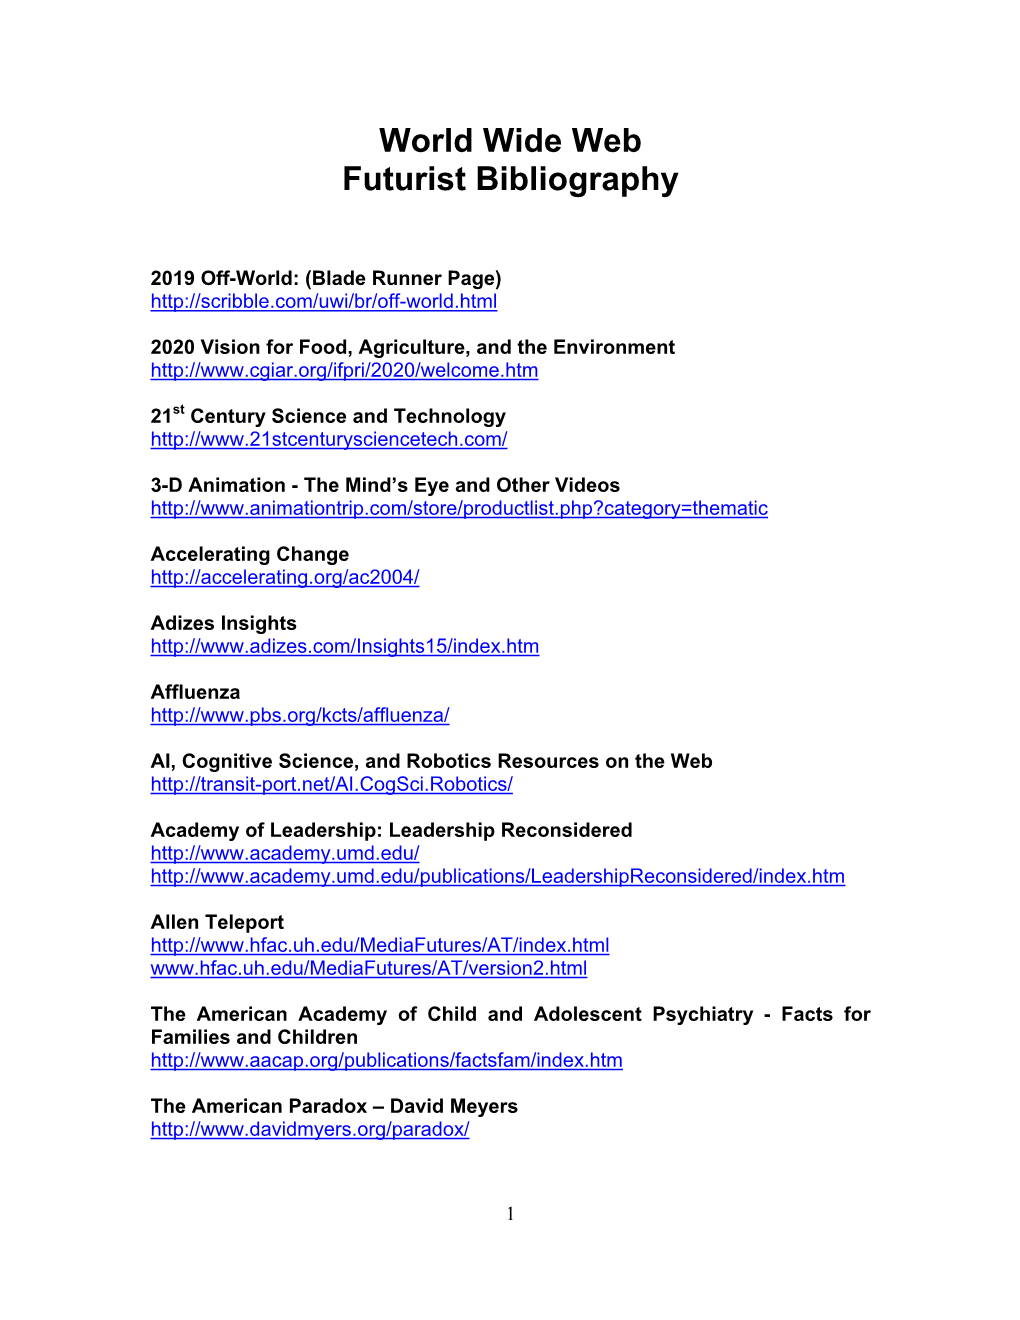 World Wide Web Futurist Bibliography